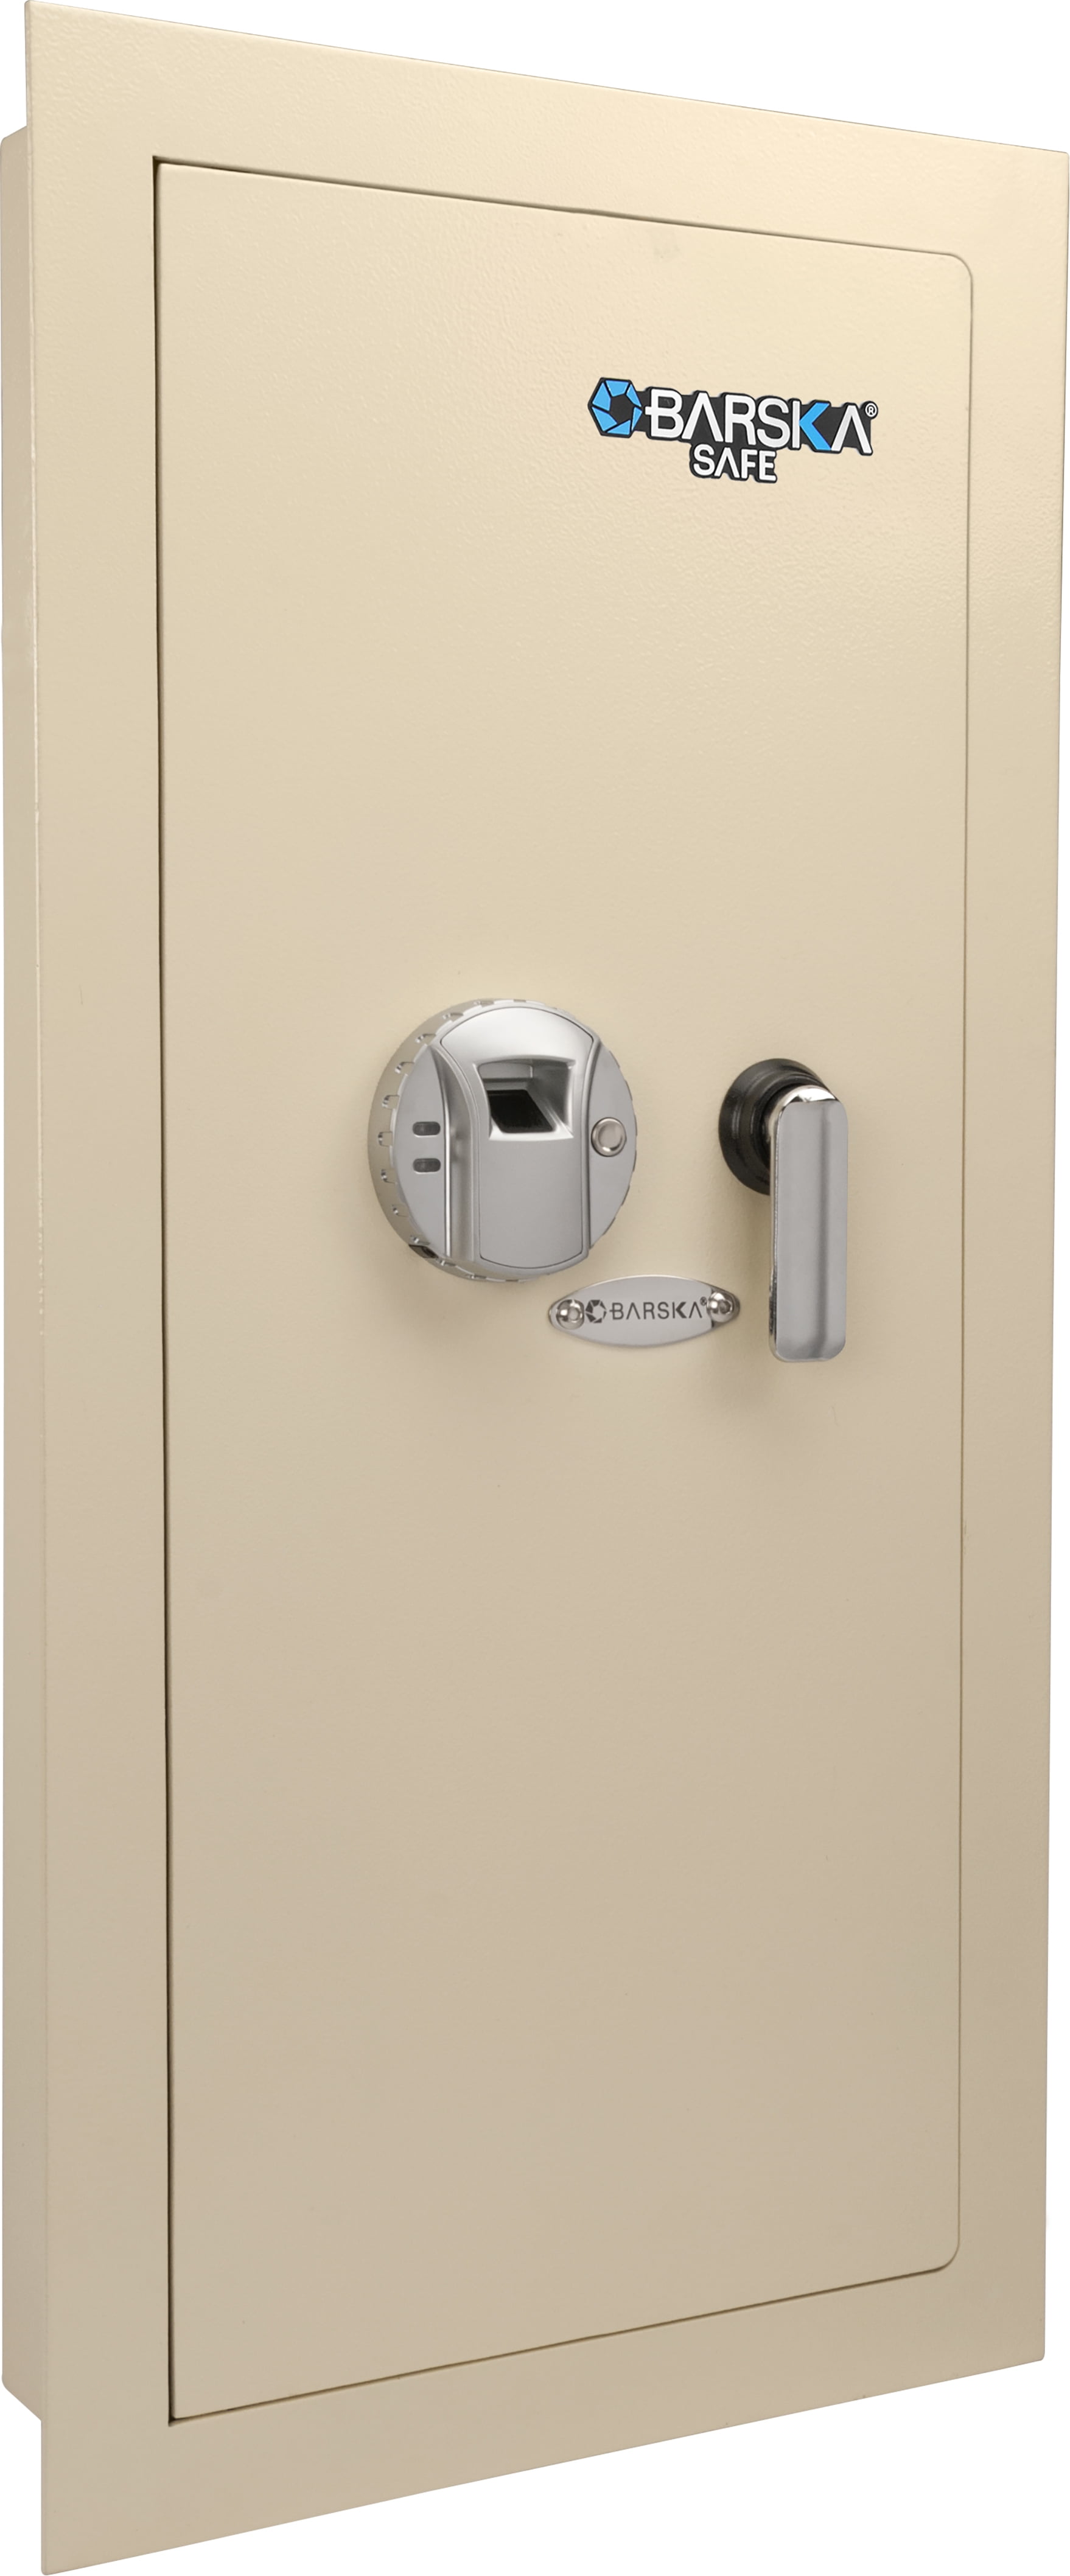 AX12038 Barska Biometric Wall Hidden Safe Fingerprint Lock Security Box 